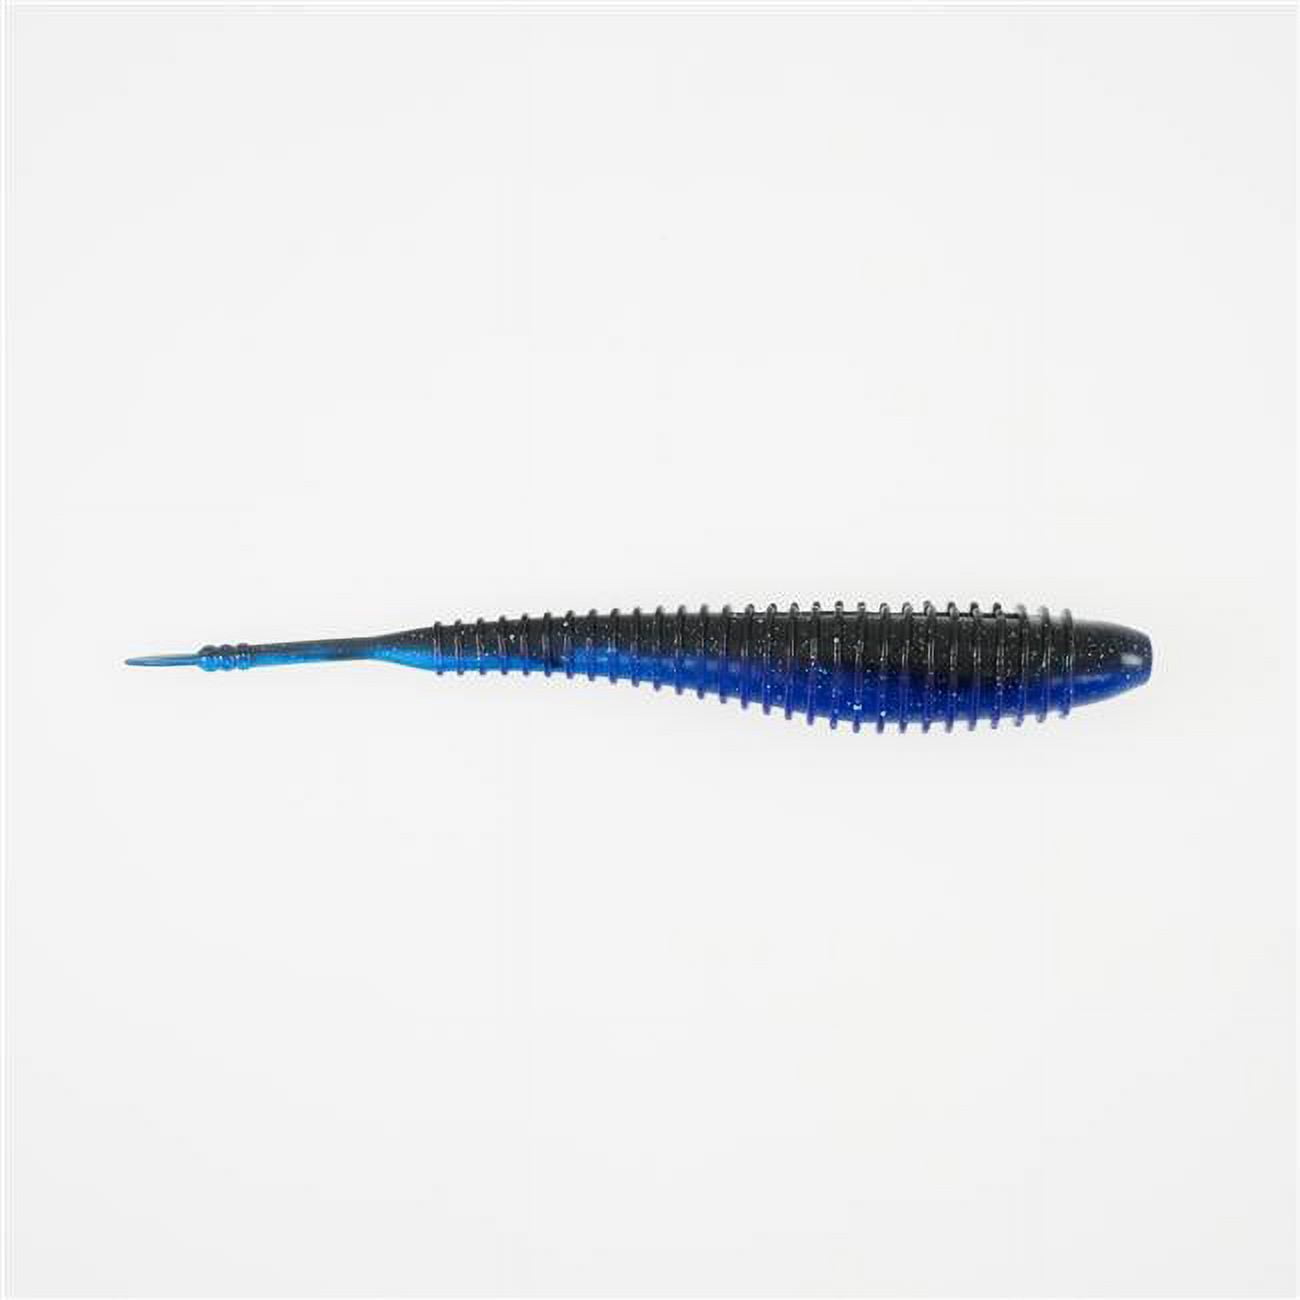 Yamamoto Baits Senko Worm, 10 Pack, 4in, Blue & Black Laminate 